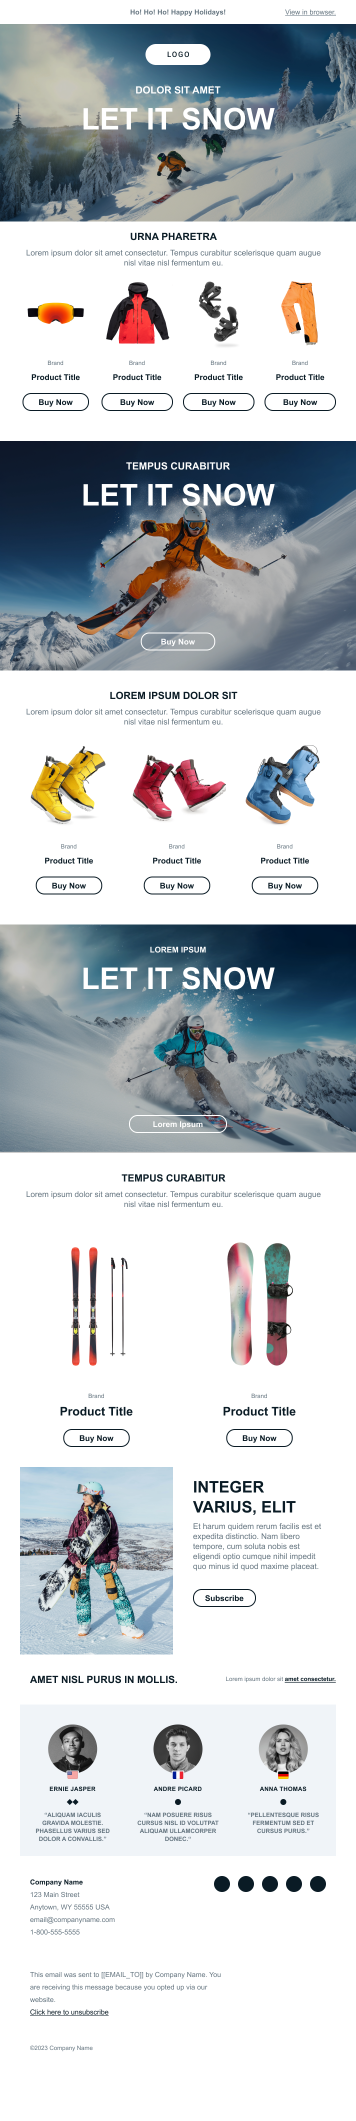 Sinch Mailjet Winter sports e-commerce template